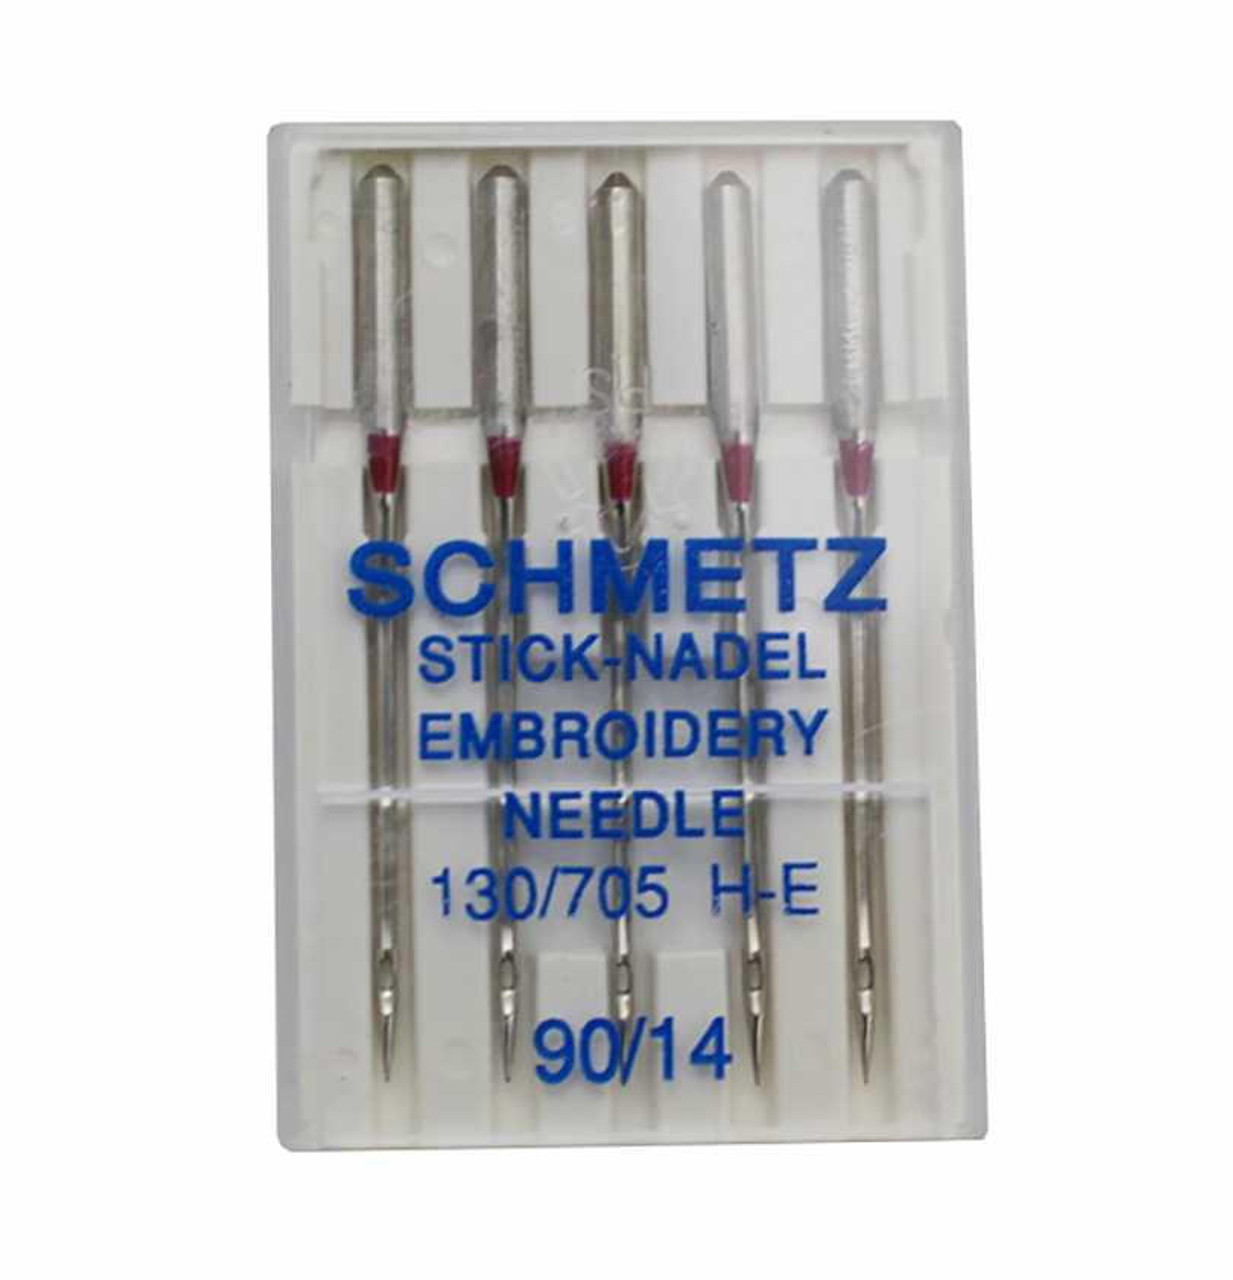 Schmetz Stick-Nadel Embroidery Needle 90/14